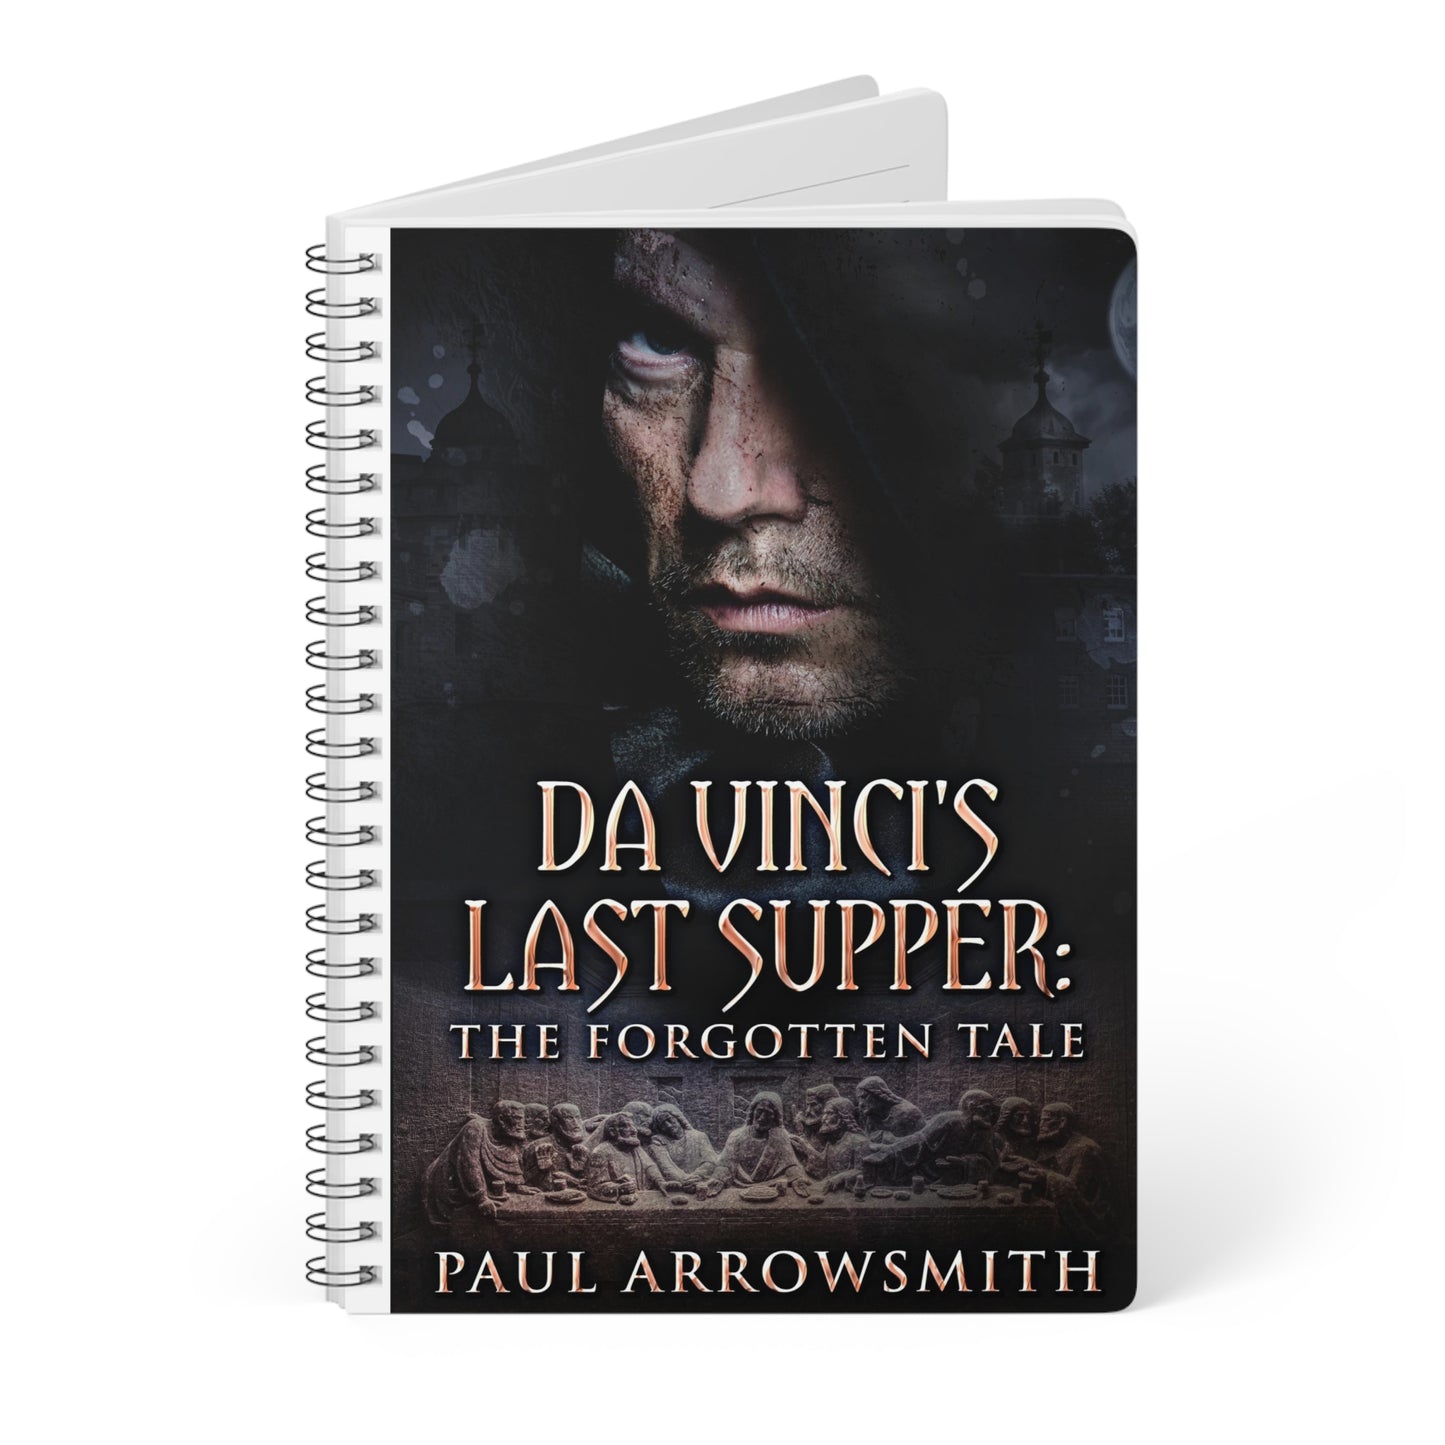 Da Vinci's Last Supper - The Forgotten Tale - A5 Wirebound Notebook